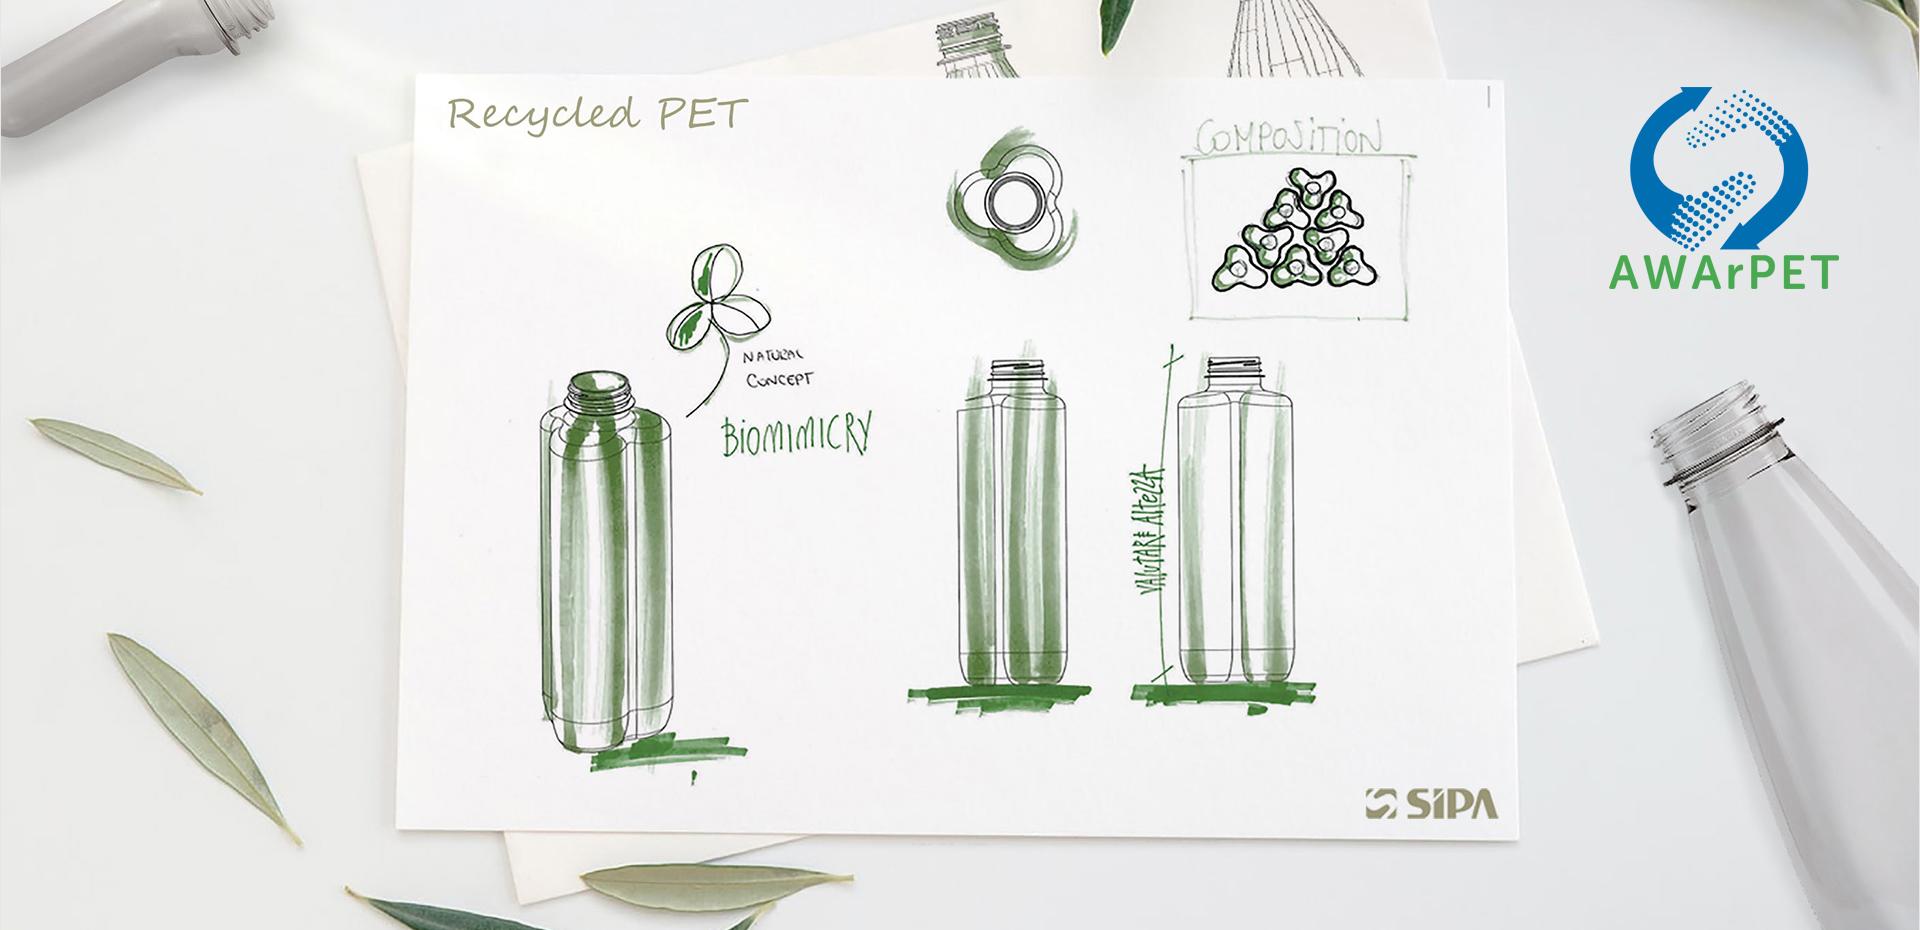 sipa awarpet in pet packaging